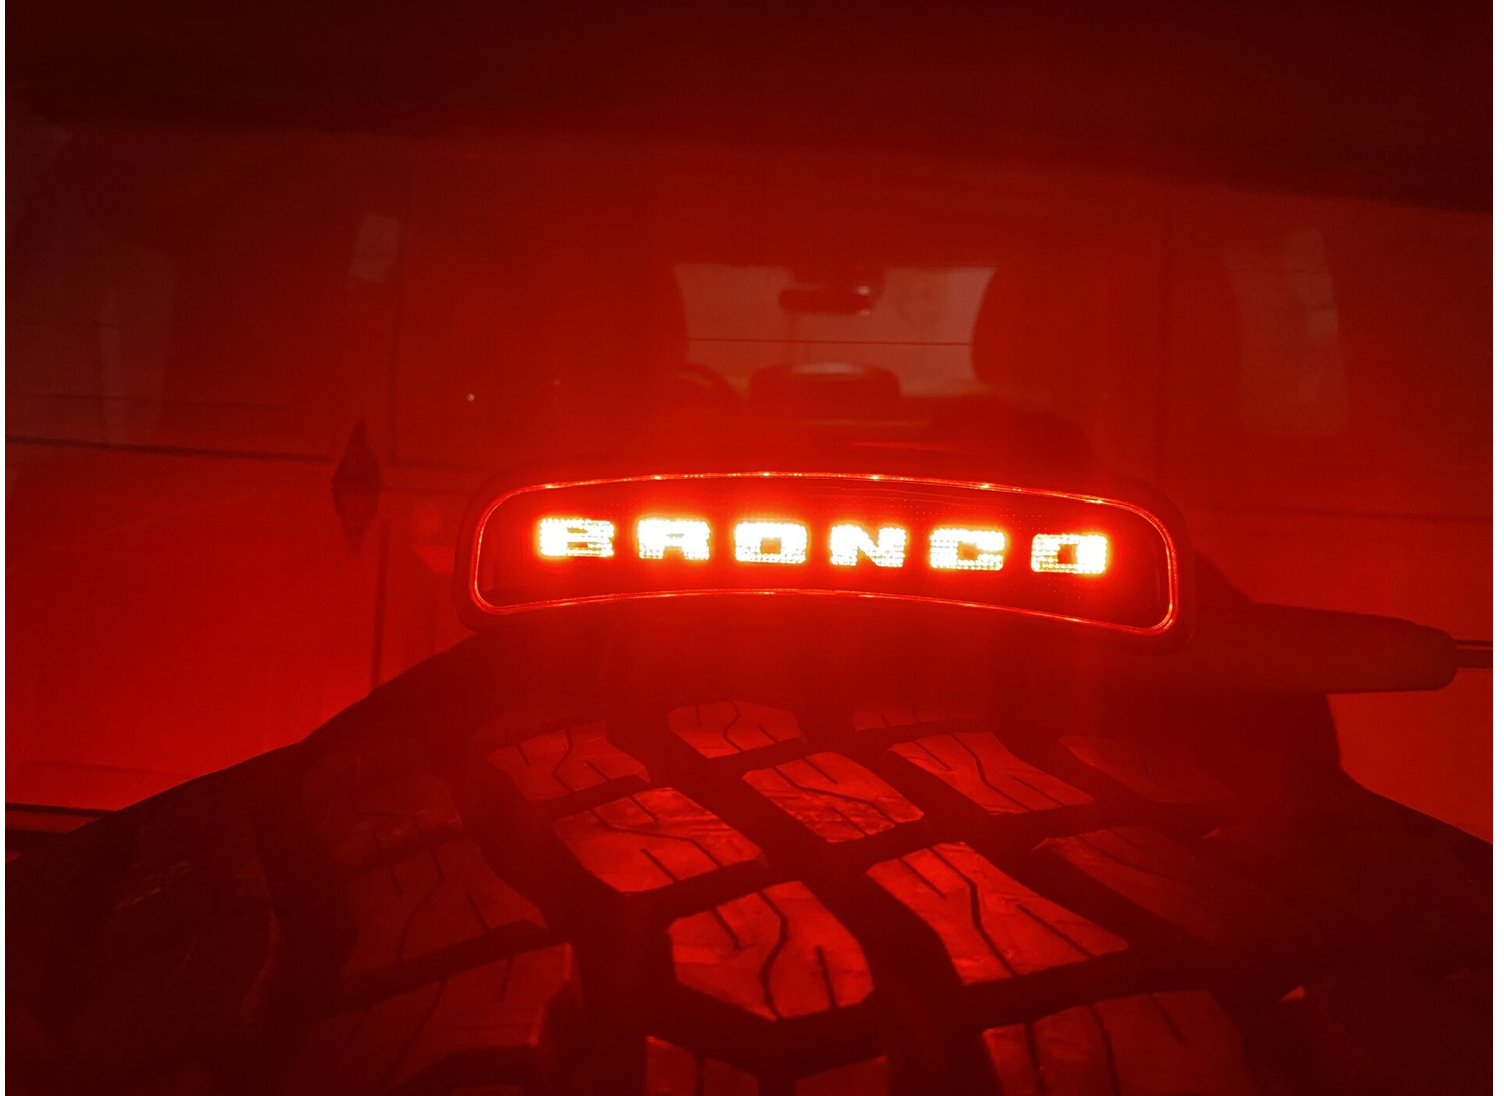 Ford Bronco Put any cool / unique vinyl decals on your Bronco?  Let's see them! 954795D5-75F1-436D-B6A7-79E945A9EED0